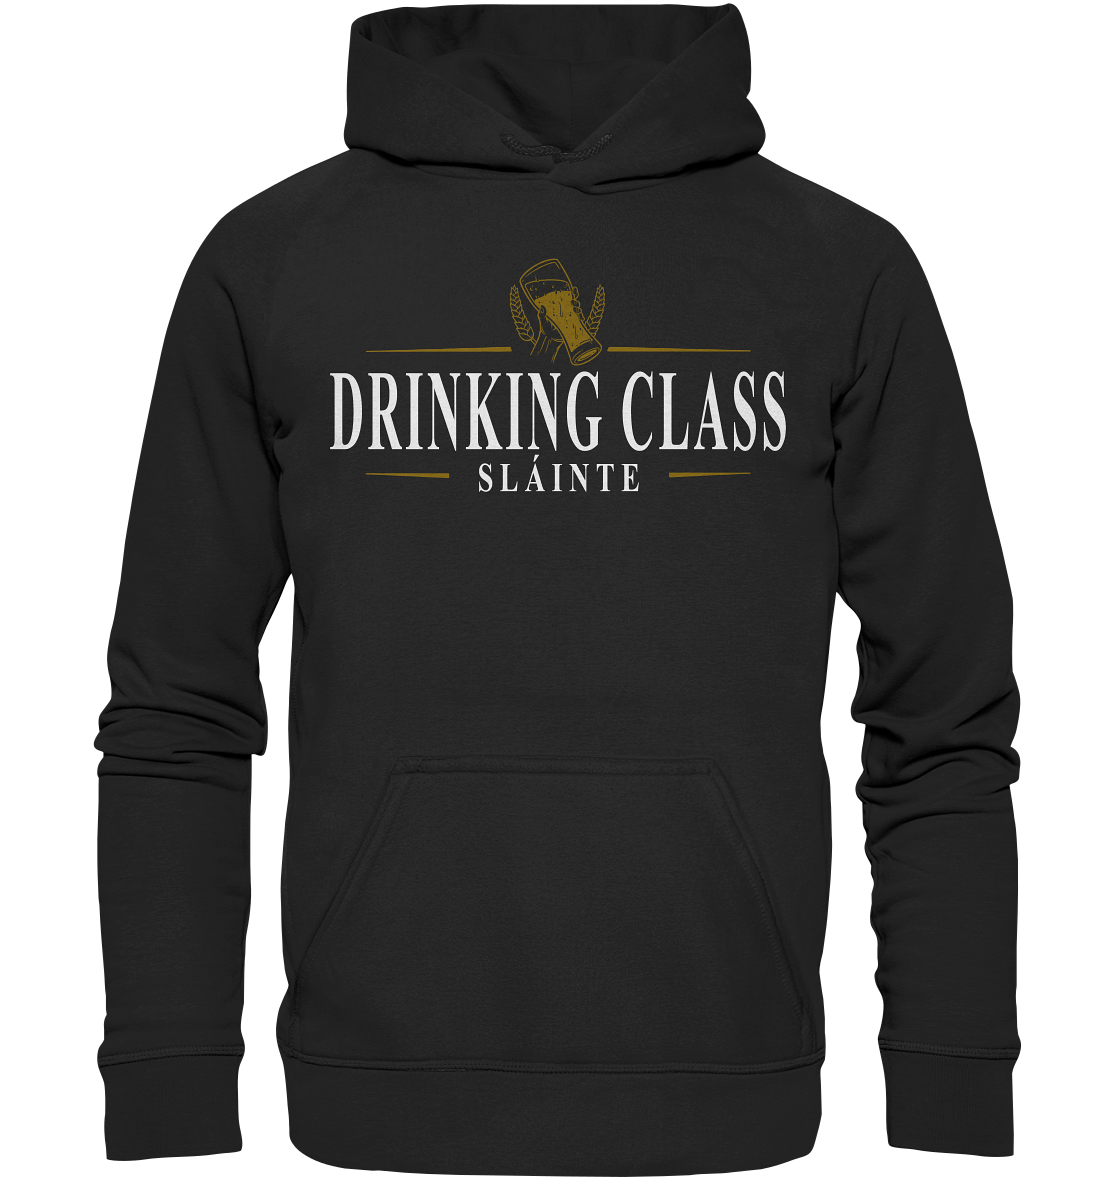 Drinking Class "Sláinte" - Basic Unisex Hoodie